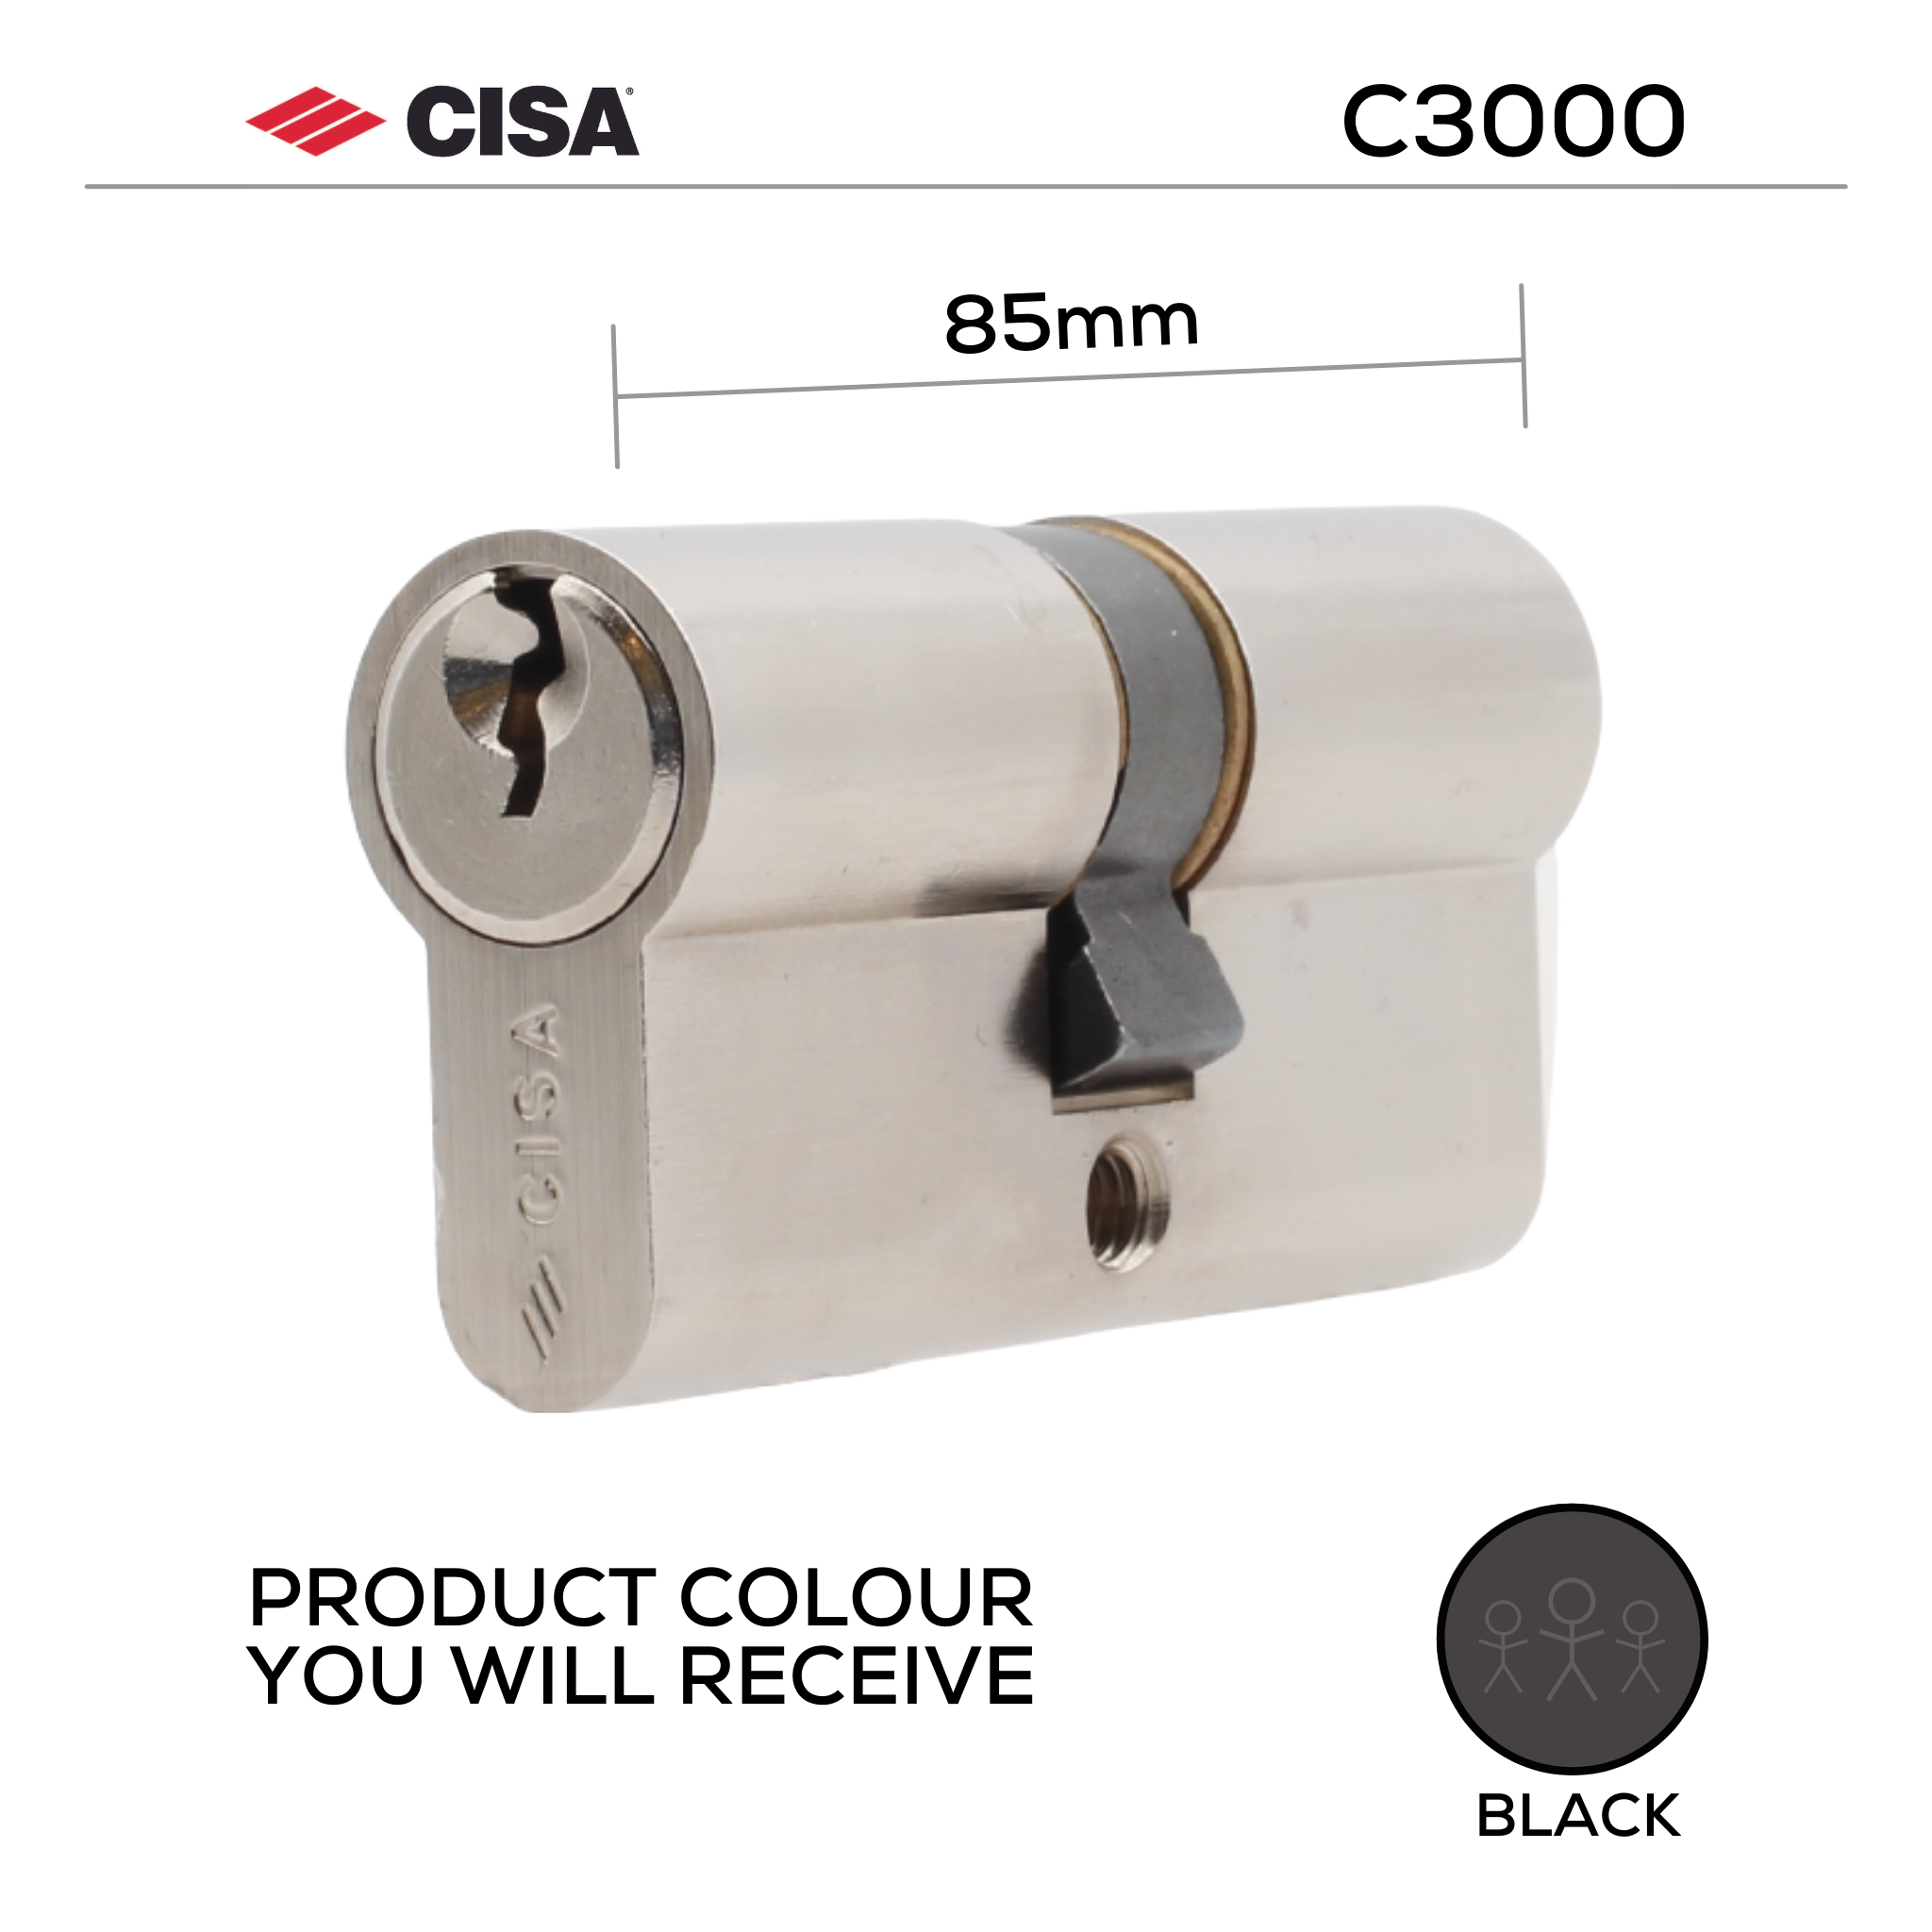 0N310-46-00-BLK-KD, 85mm - 42.5/42.5, Double Cylinder, C3000, Key to Key, Keyed to Differ (Standard), 3 Keys, 6 Pin, Black, CISA